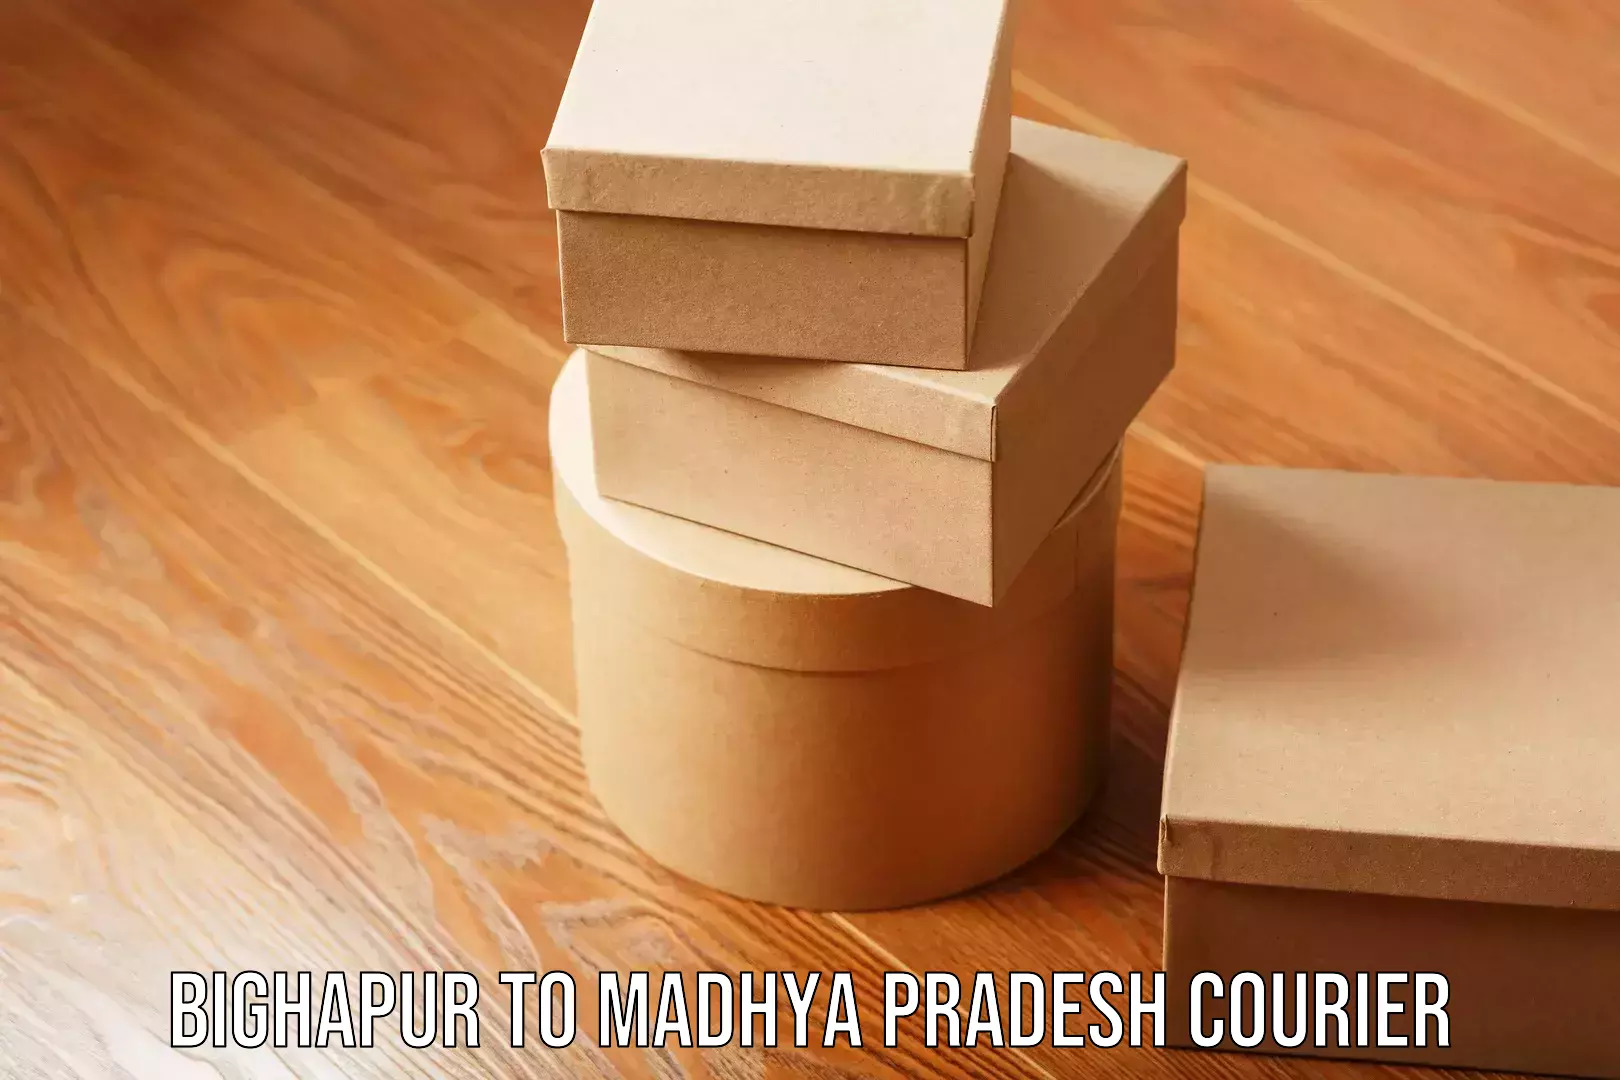 Courier service partnerships Bighapur to Madhya Pradesh